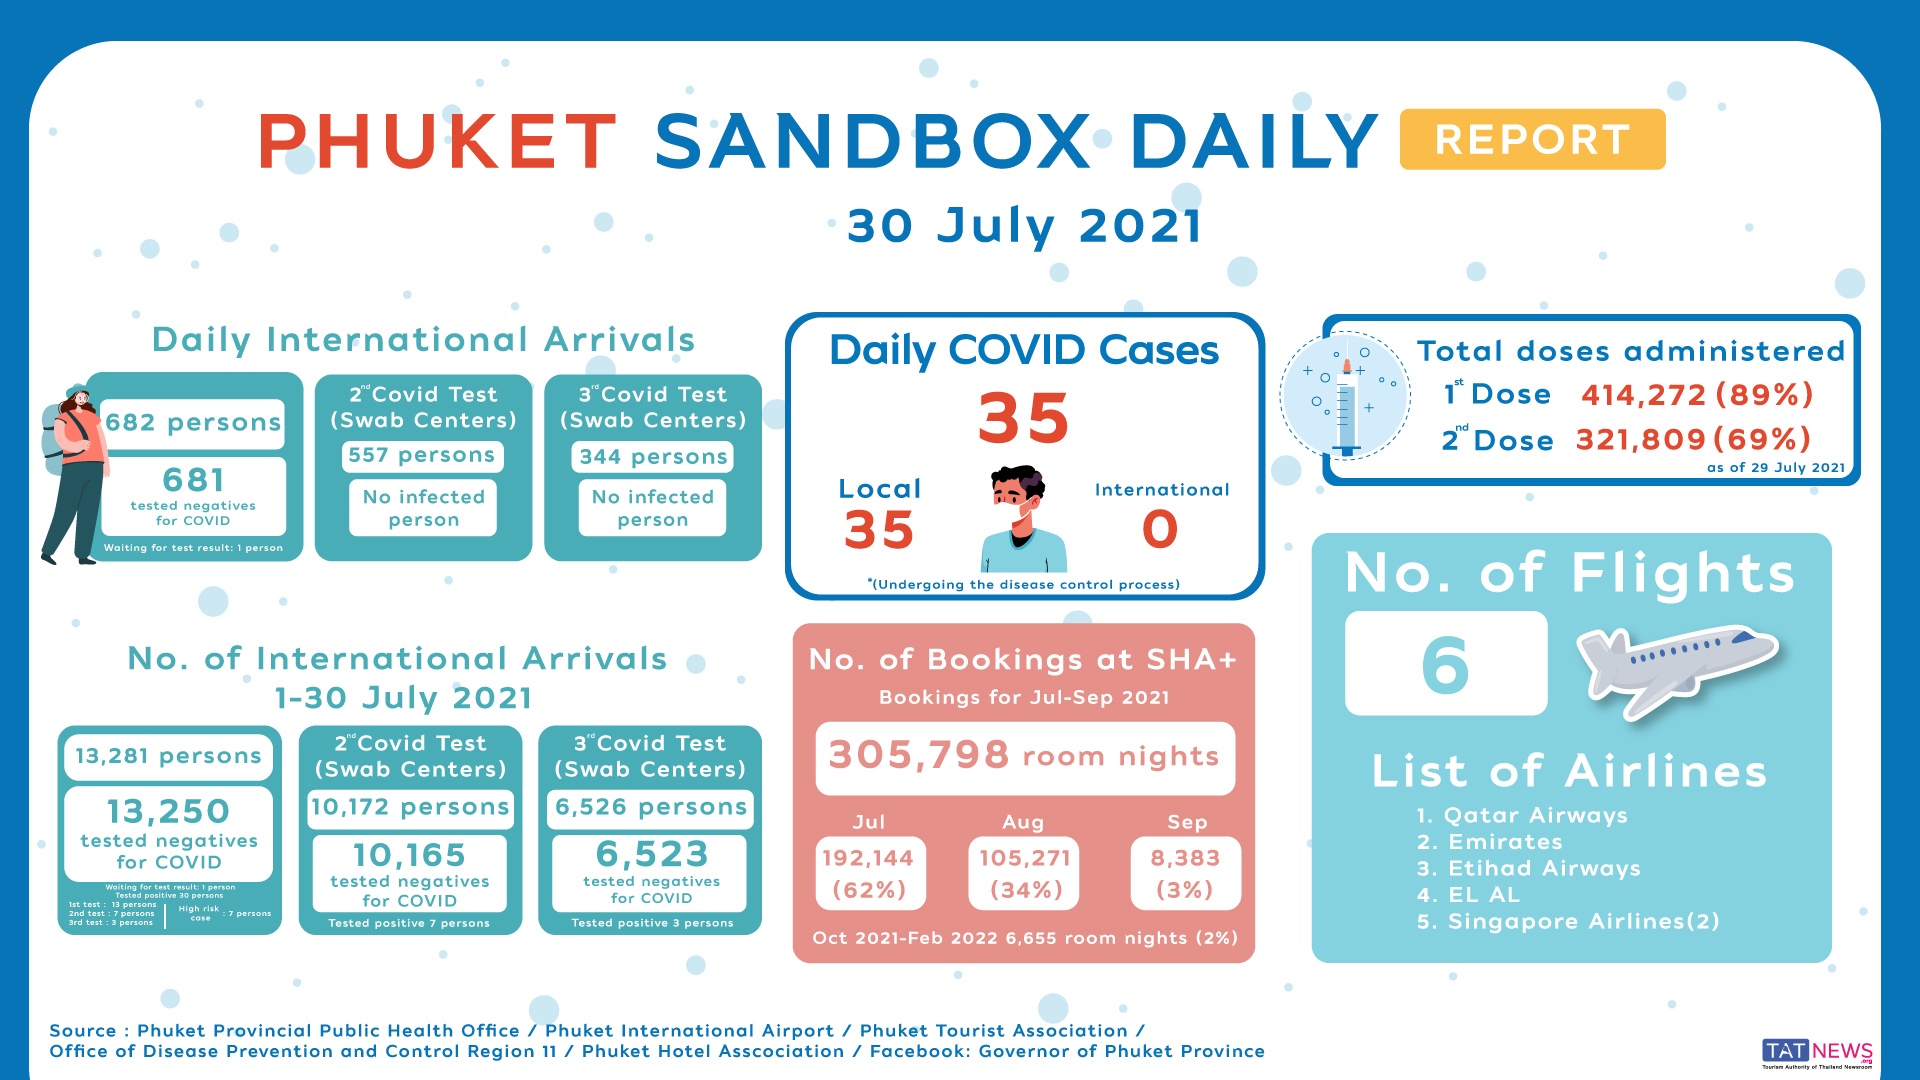 Phuket-Sandbox-Daily-Report-as-of-30July2021.jpg